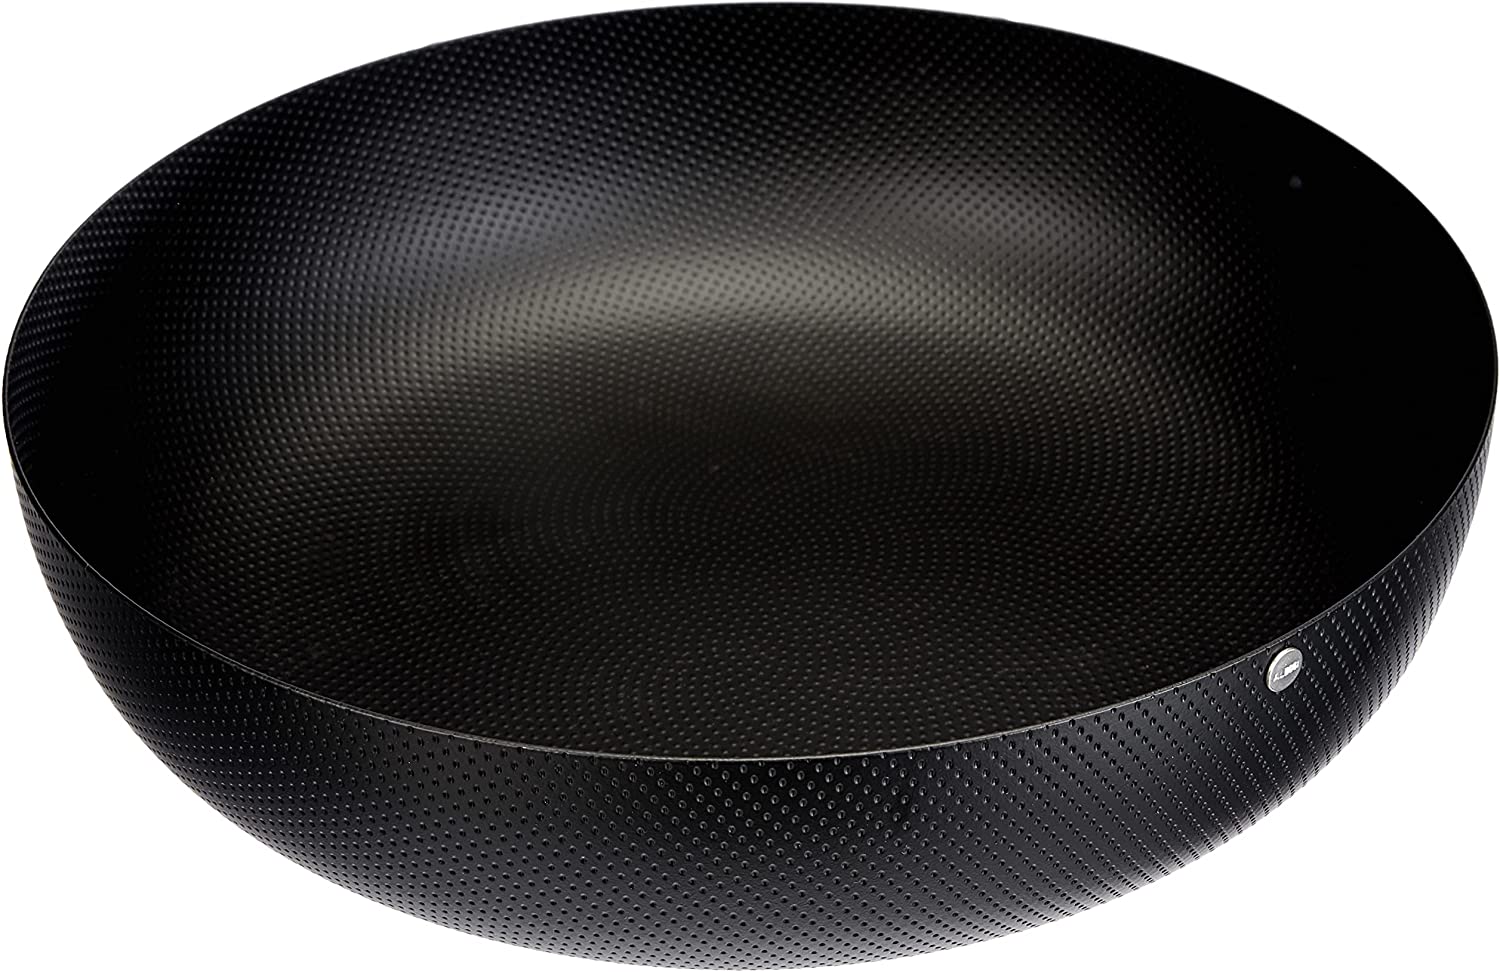 Alessi JM17/29 BT - Design Bowl, Round Steel, Epoxy Resin, Black with Relief Decoration